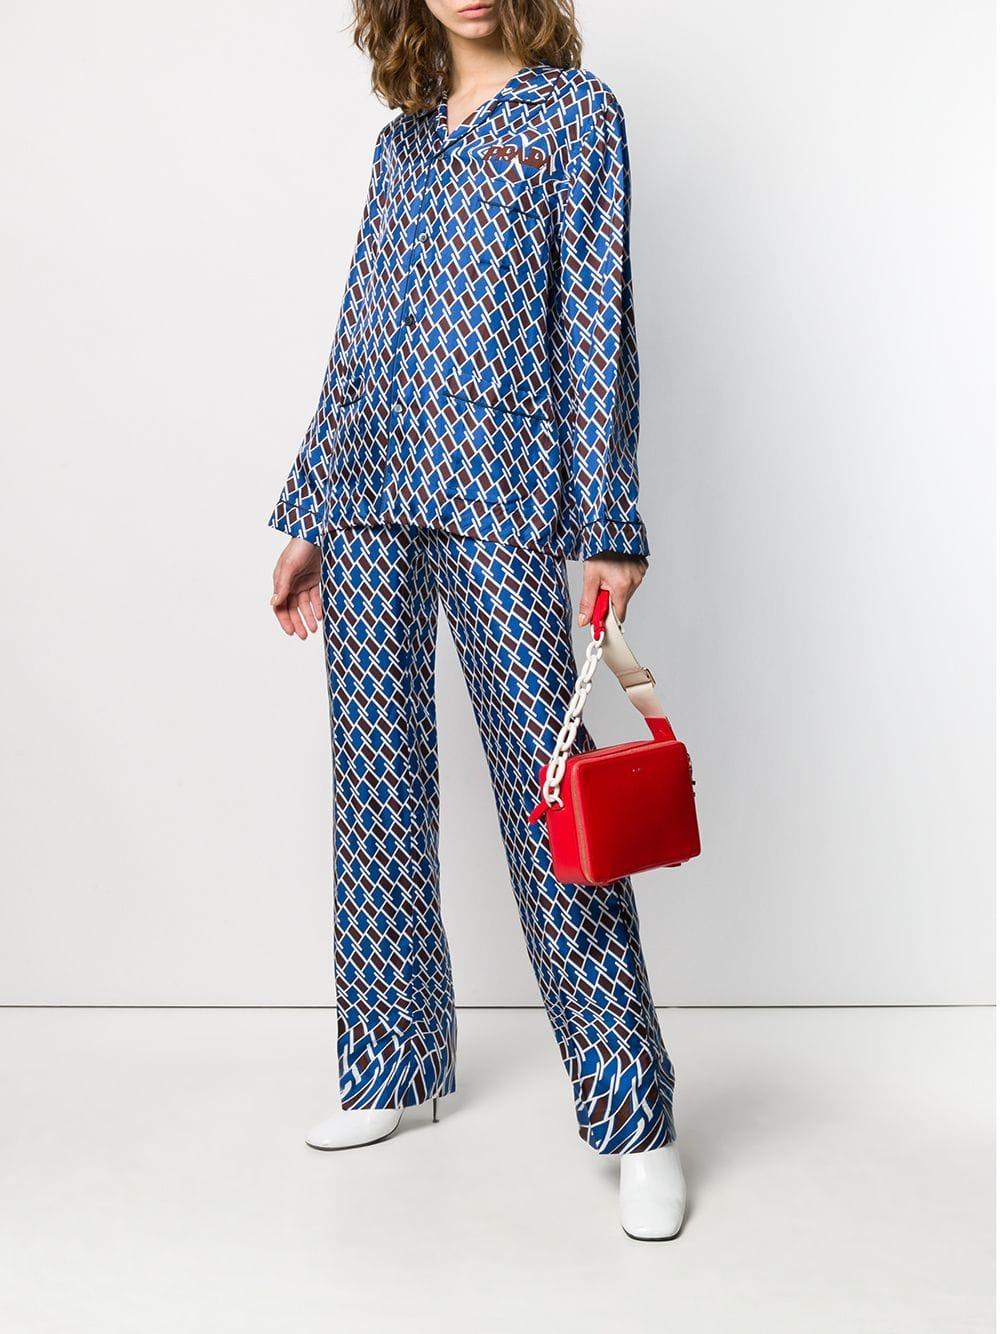 Prada Silk Geometric Print Pyjamas in Blue & Brown (Blue) - Lyst